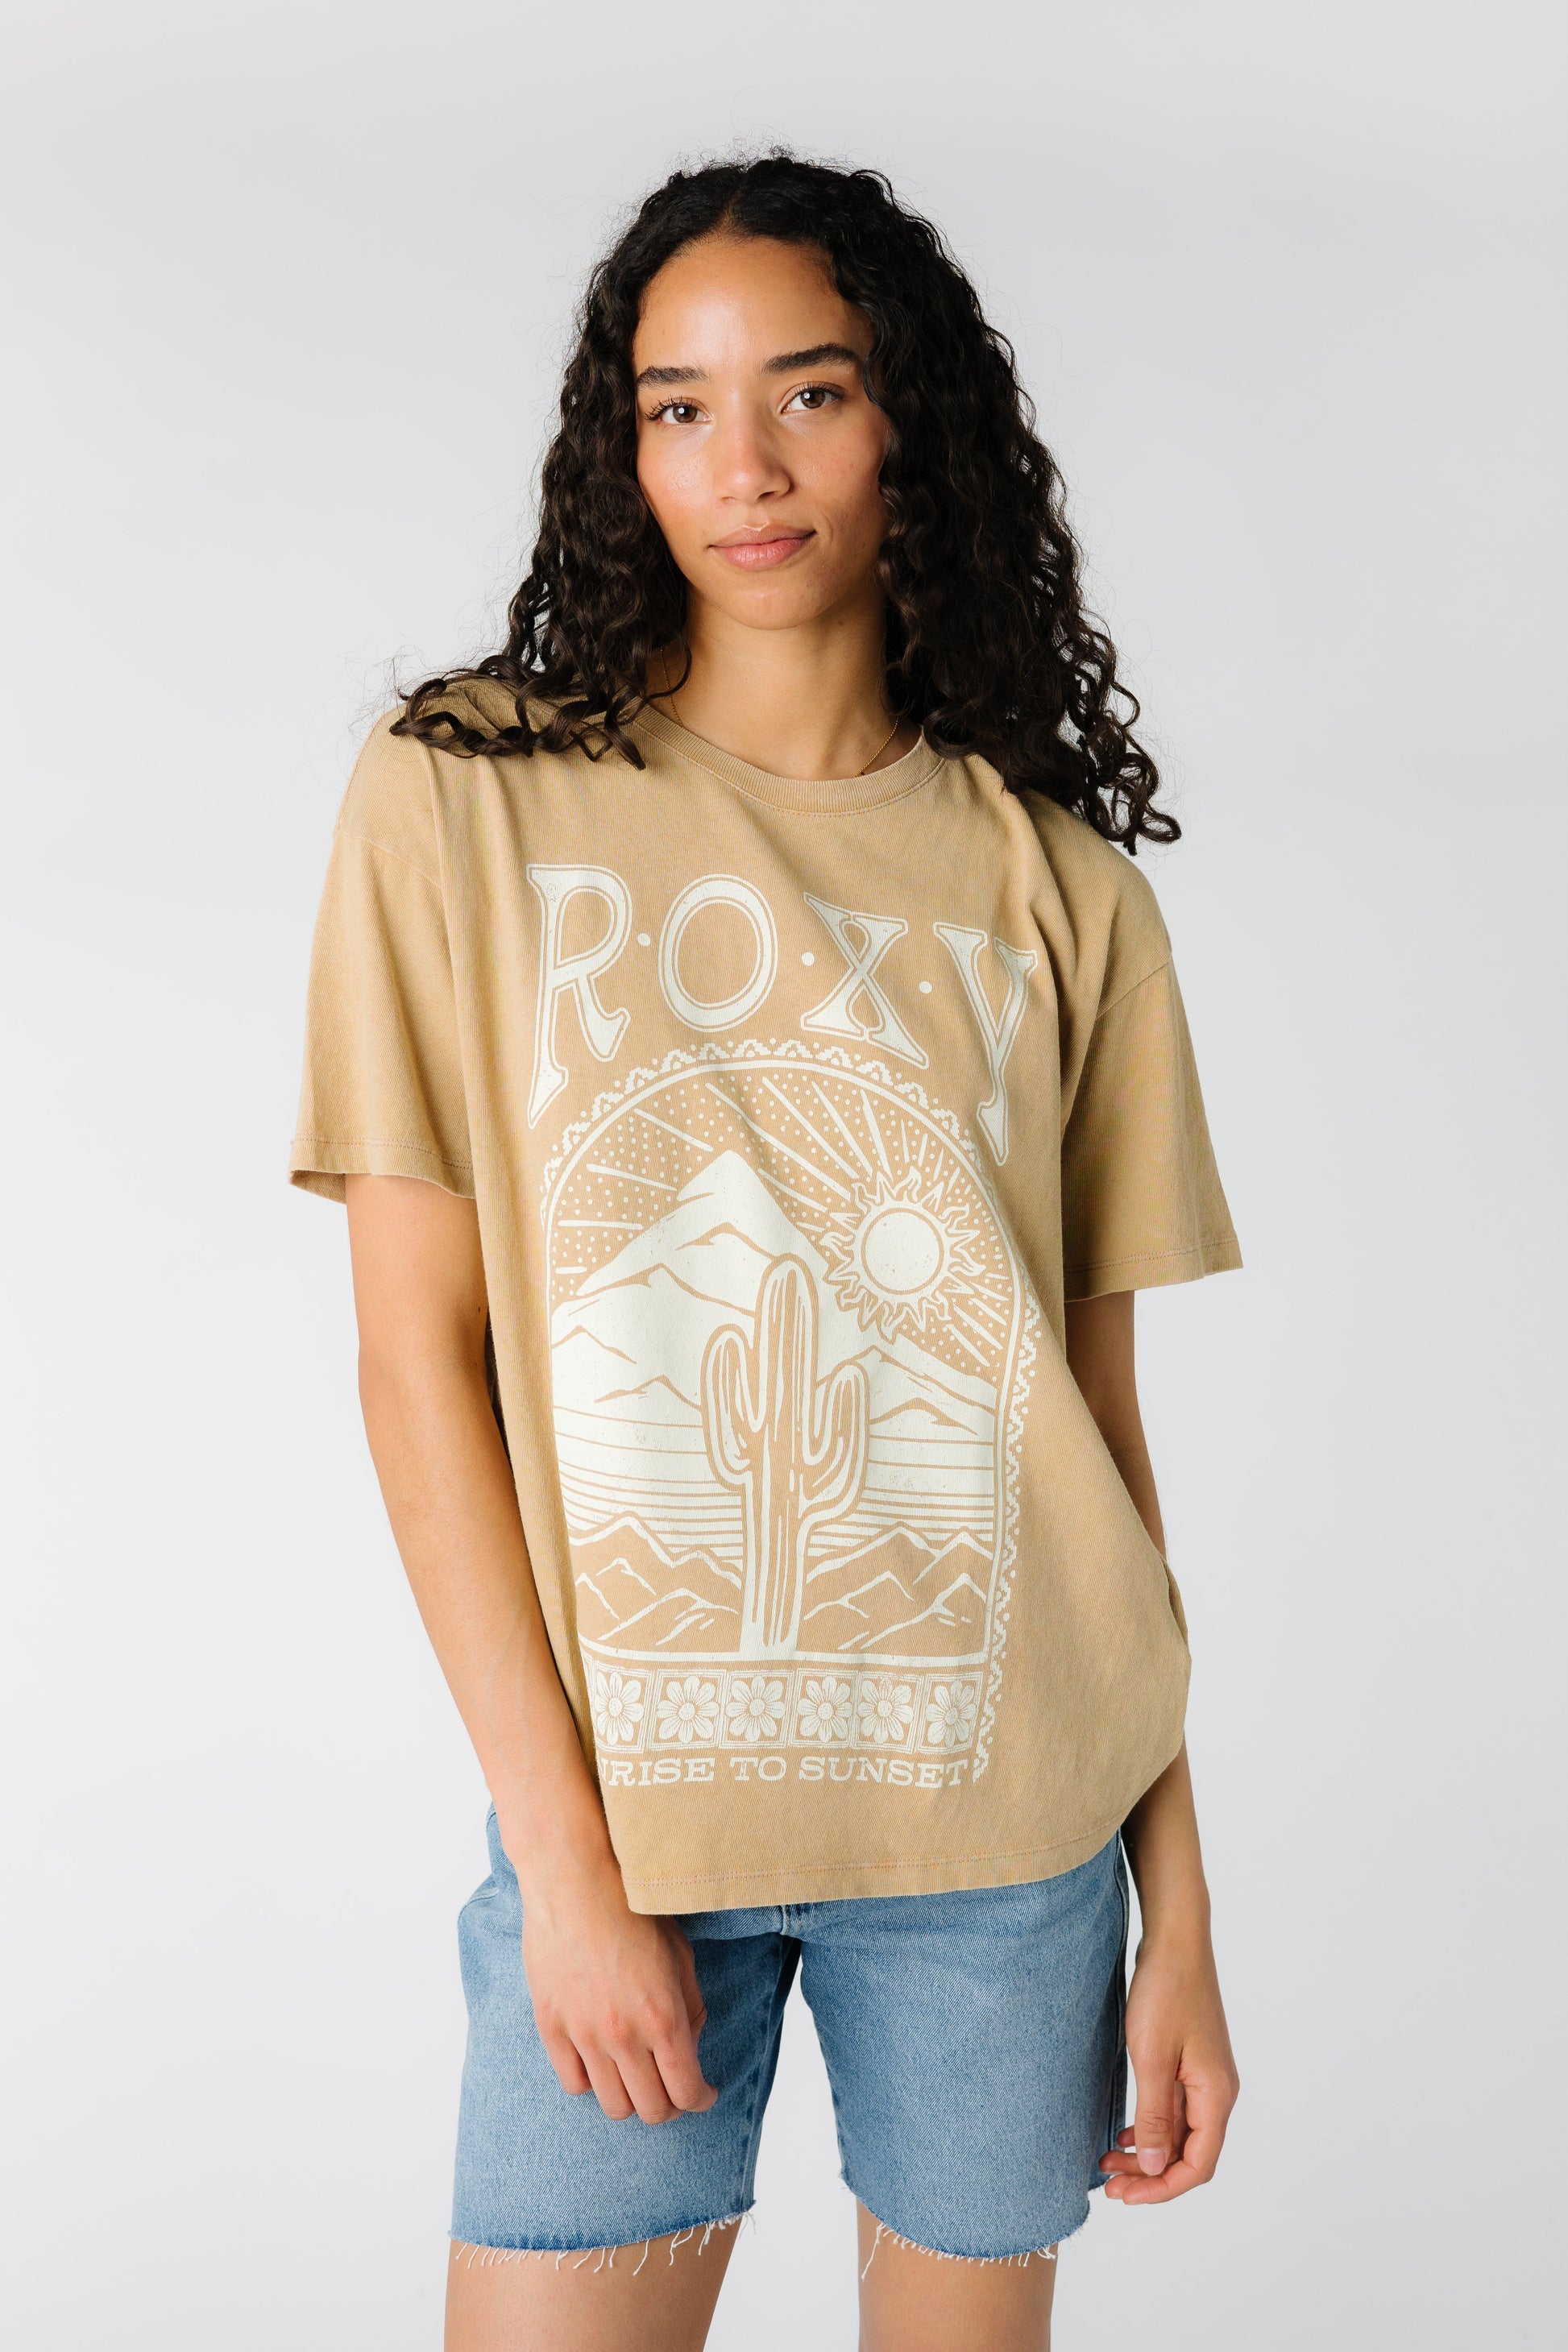 Roxy Saguaro Tee WOMEN'S T-SHIRT Roxy 